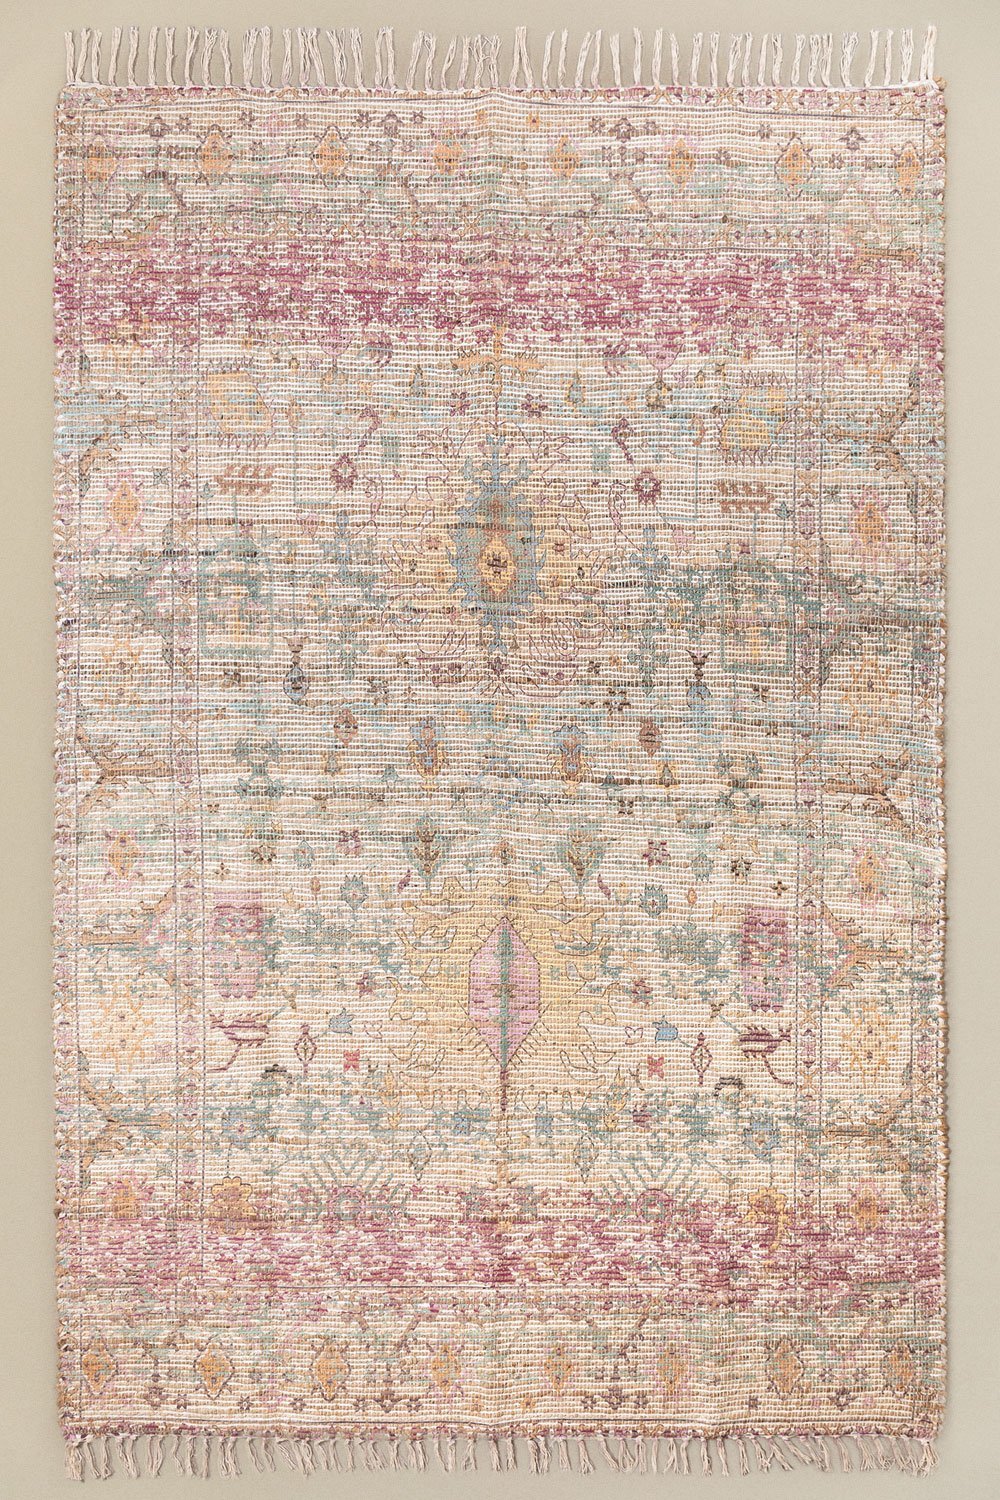 Vloerkleed van jute en stof (260x170 cm) Demir, galerij beeld 1